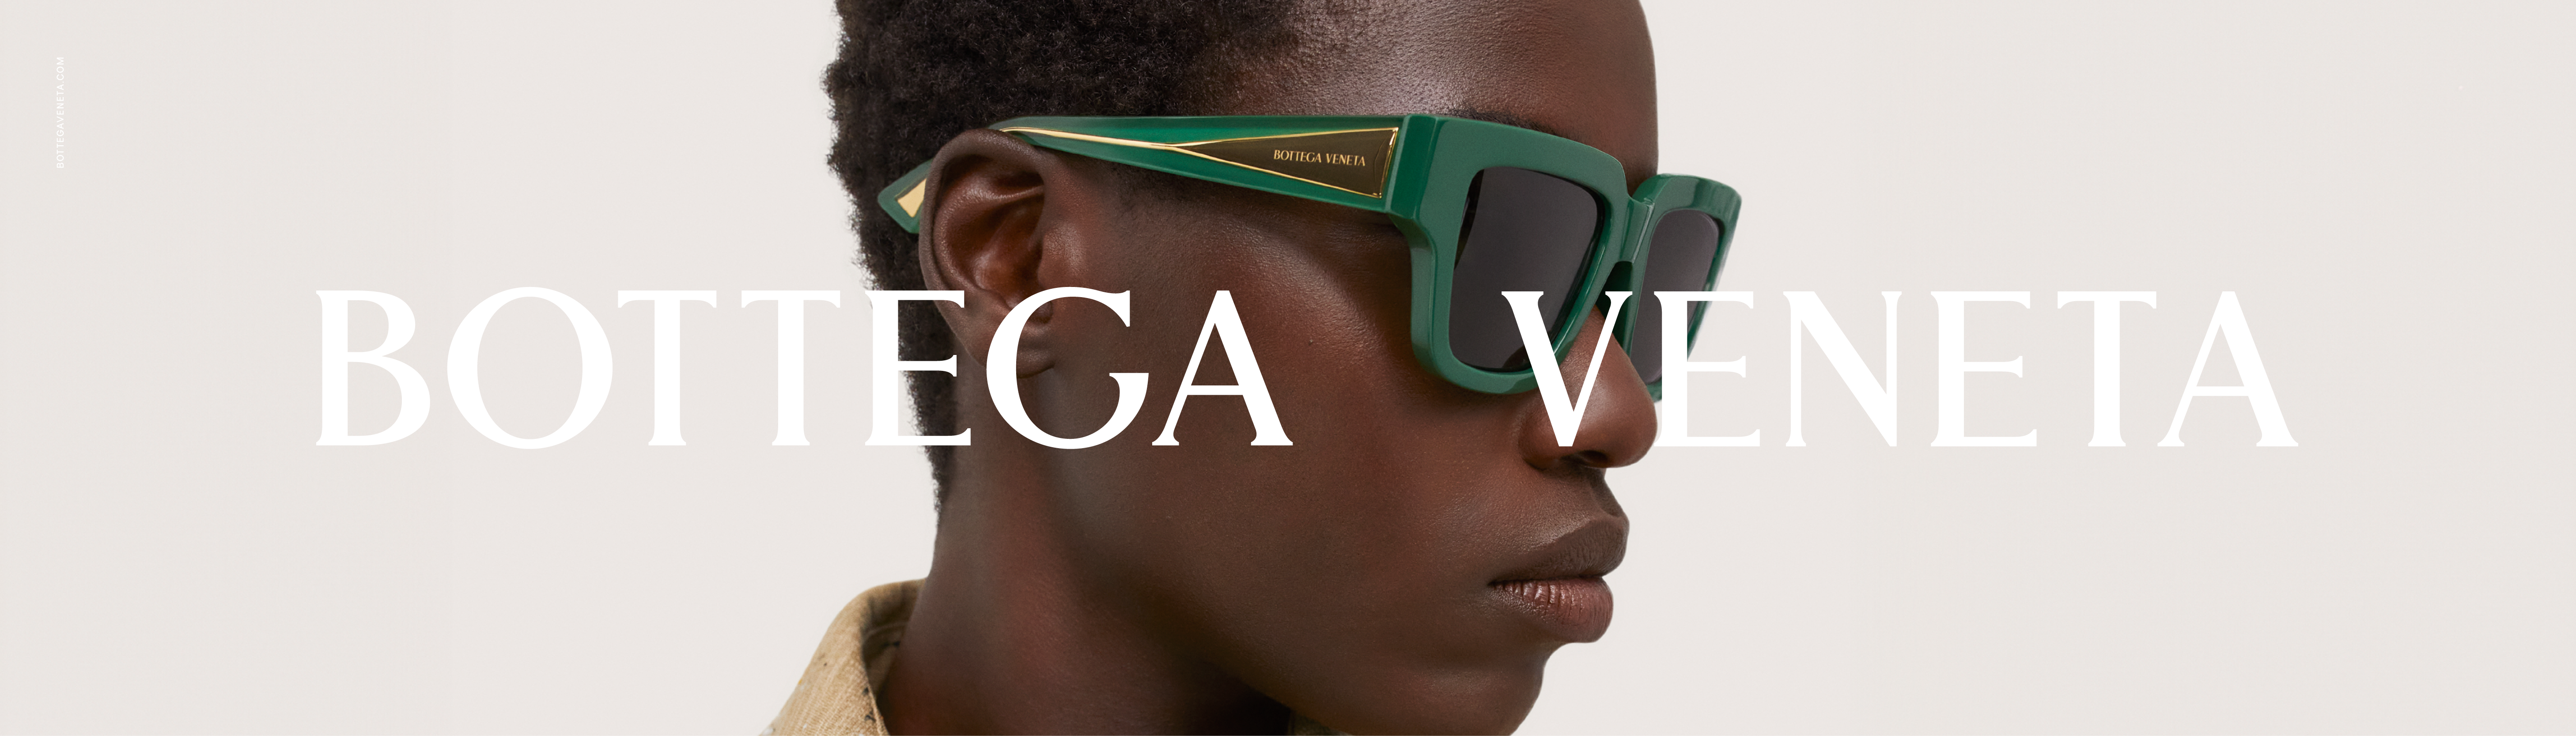 Bottega Veneta Sunglasses | Women's & Men's Collection - Pretavoir